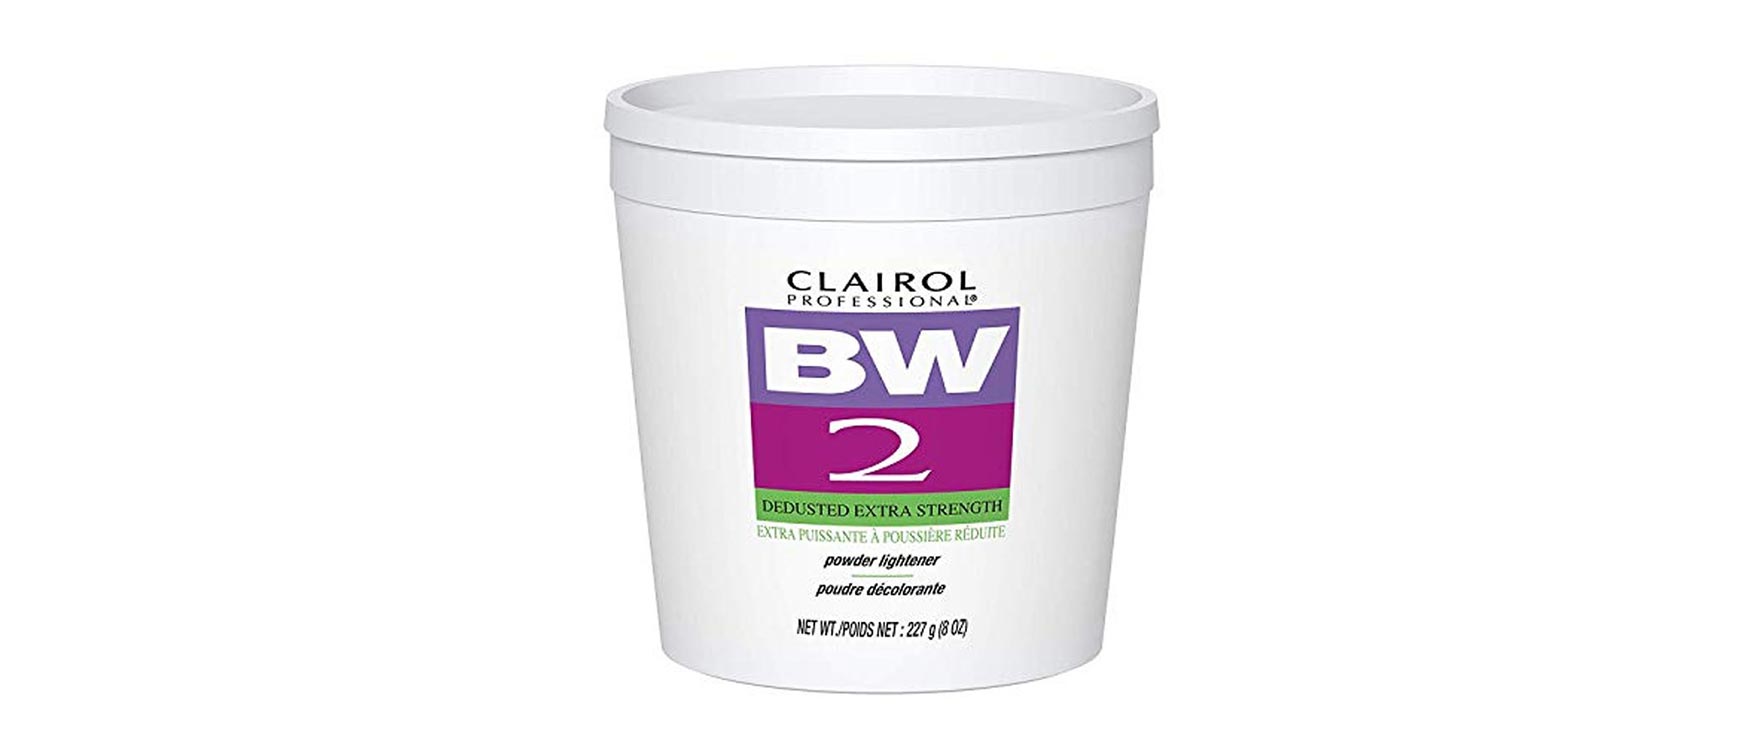 Clairol Professional BW2 Hair Powder Lightener - for Hair Lightening - wide 4